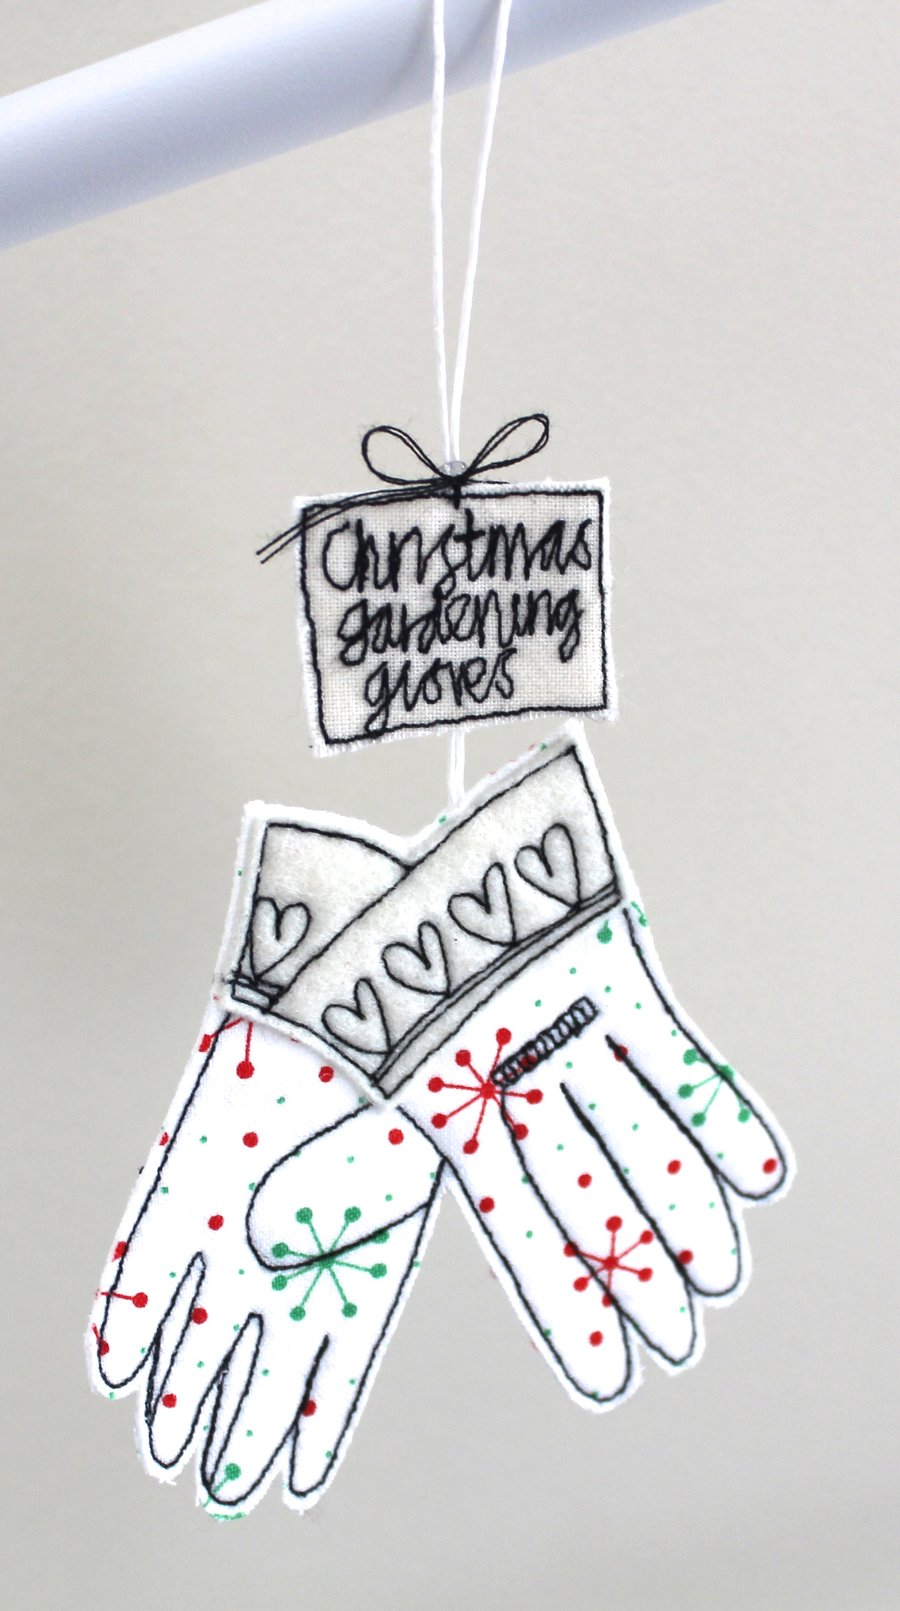 'Christmas Gardening Gloves' - Hanging Decoration